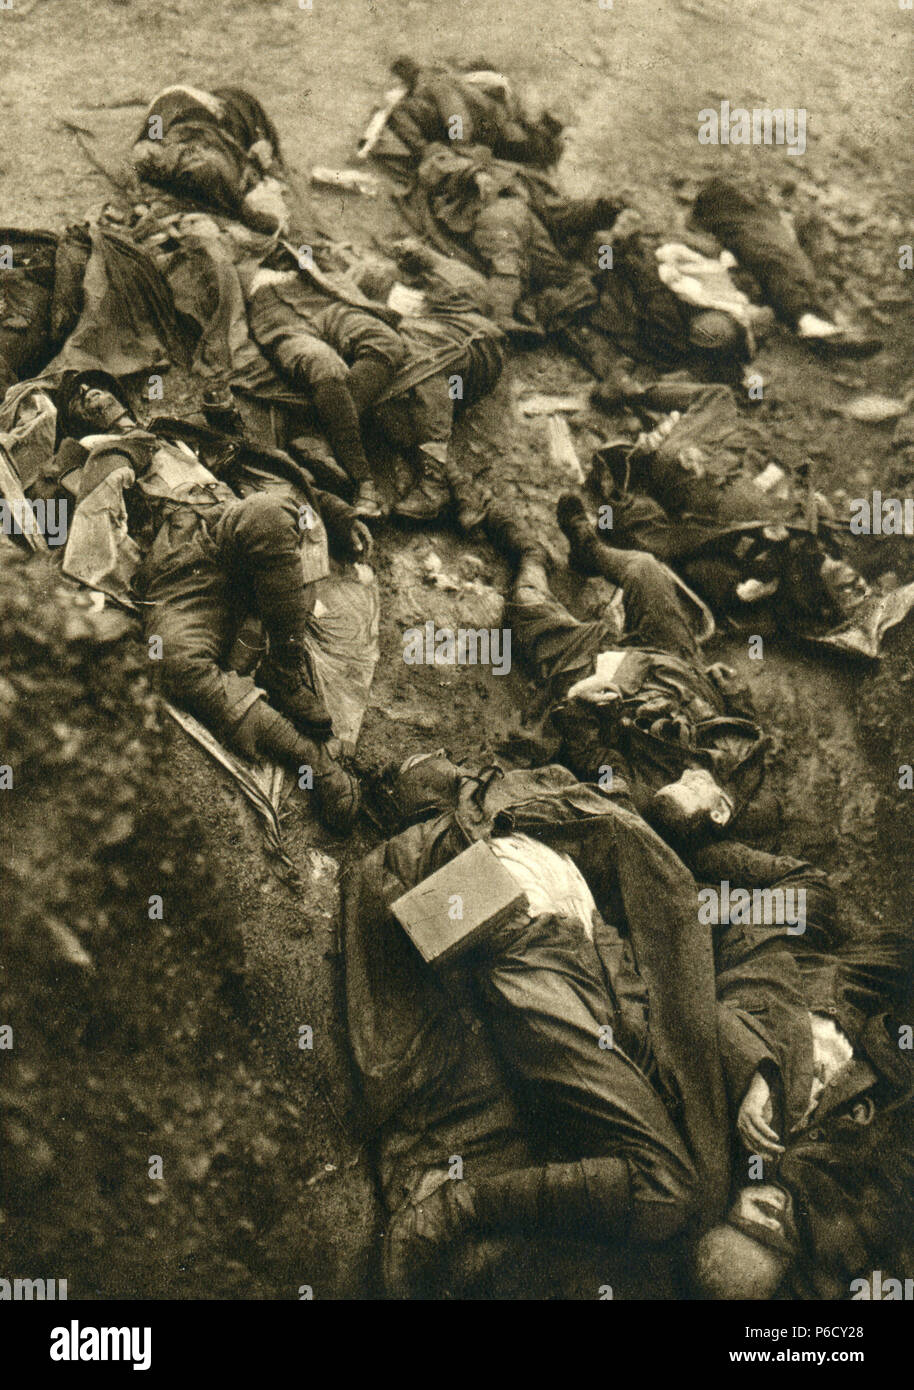 soldier cemetery, battlefield, Italian soldiers, ww1, wwi, world war one Stock Photo